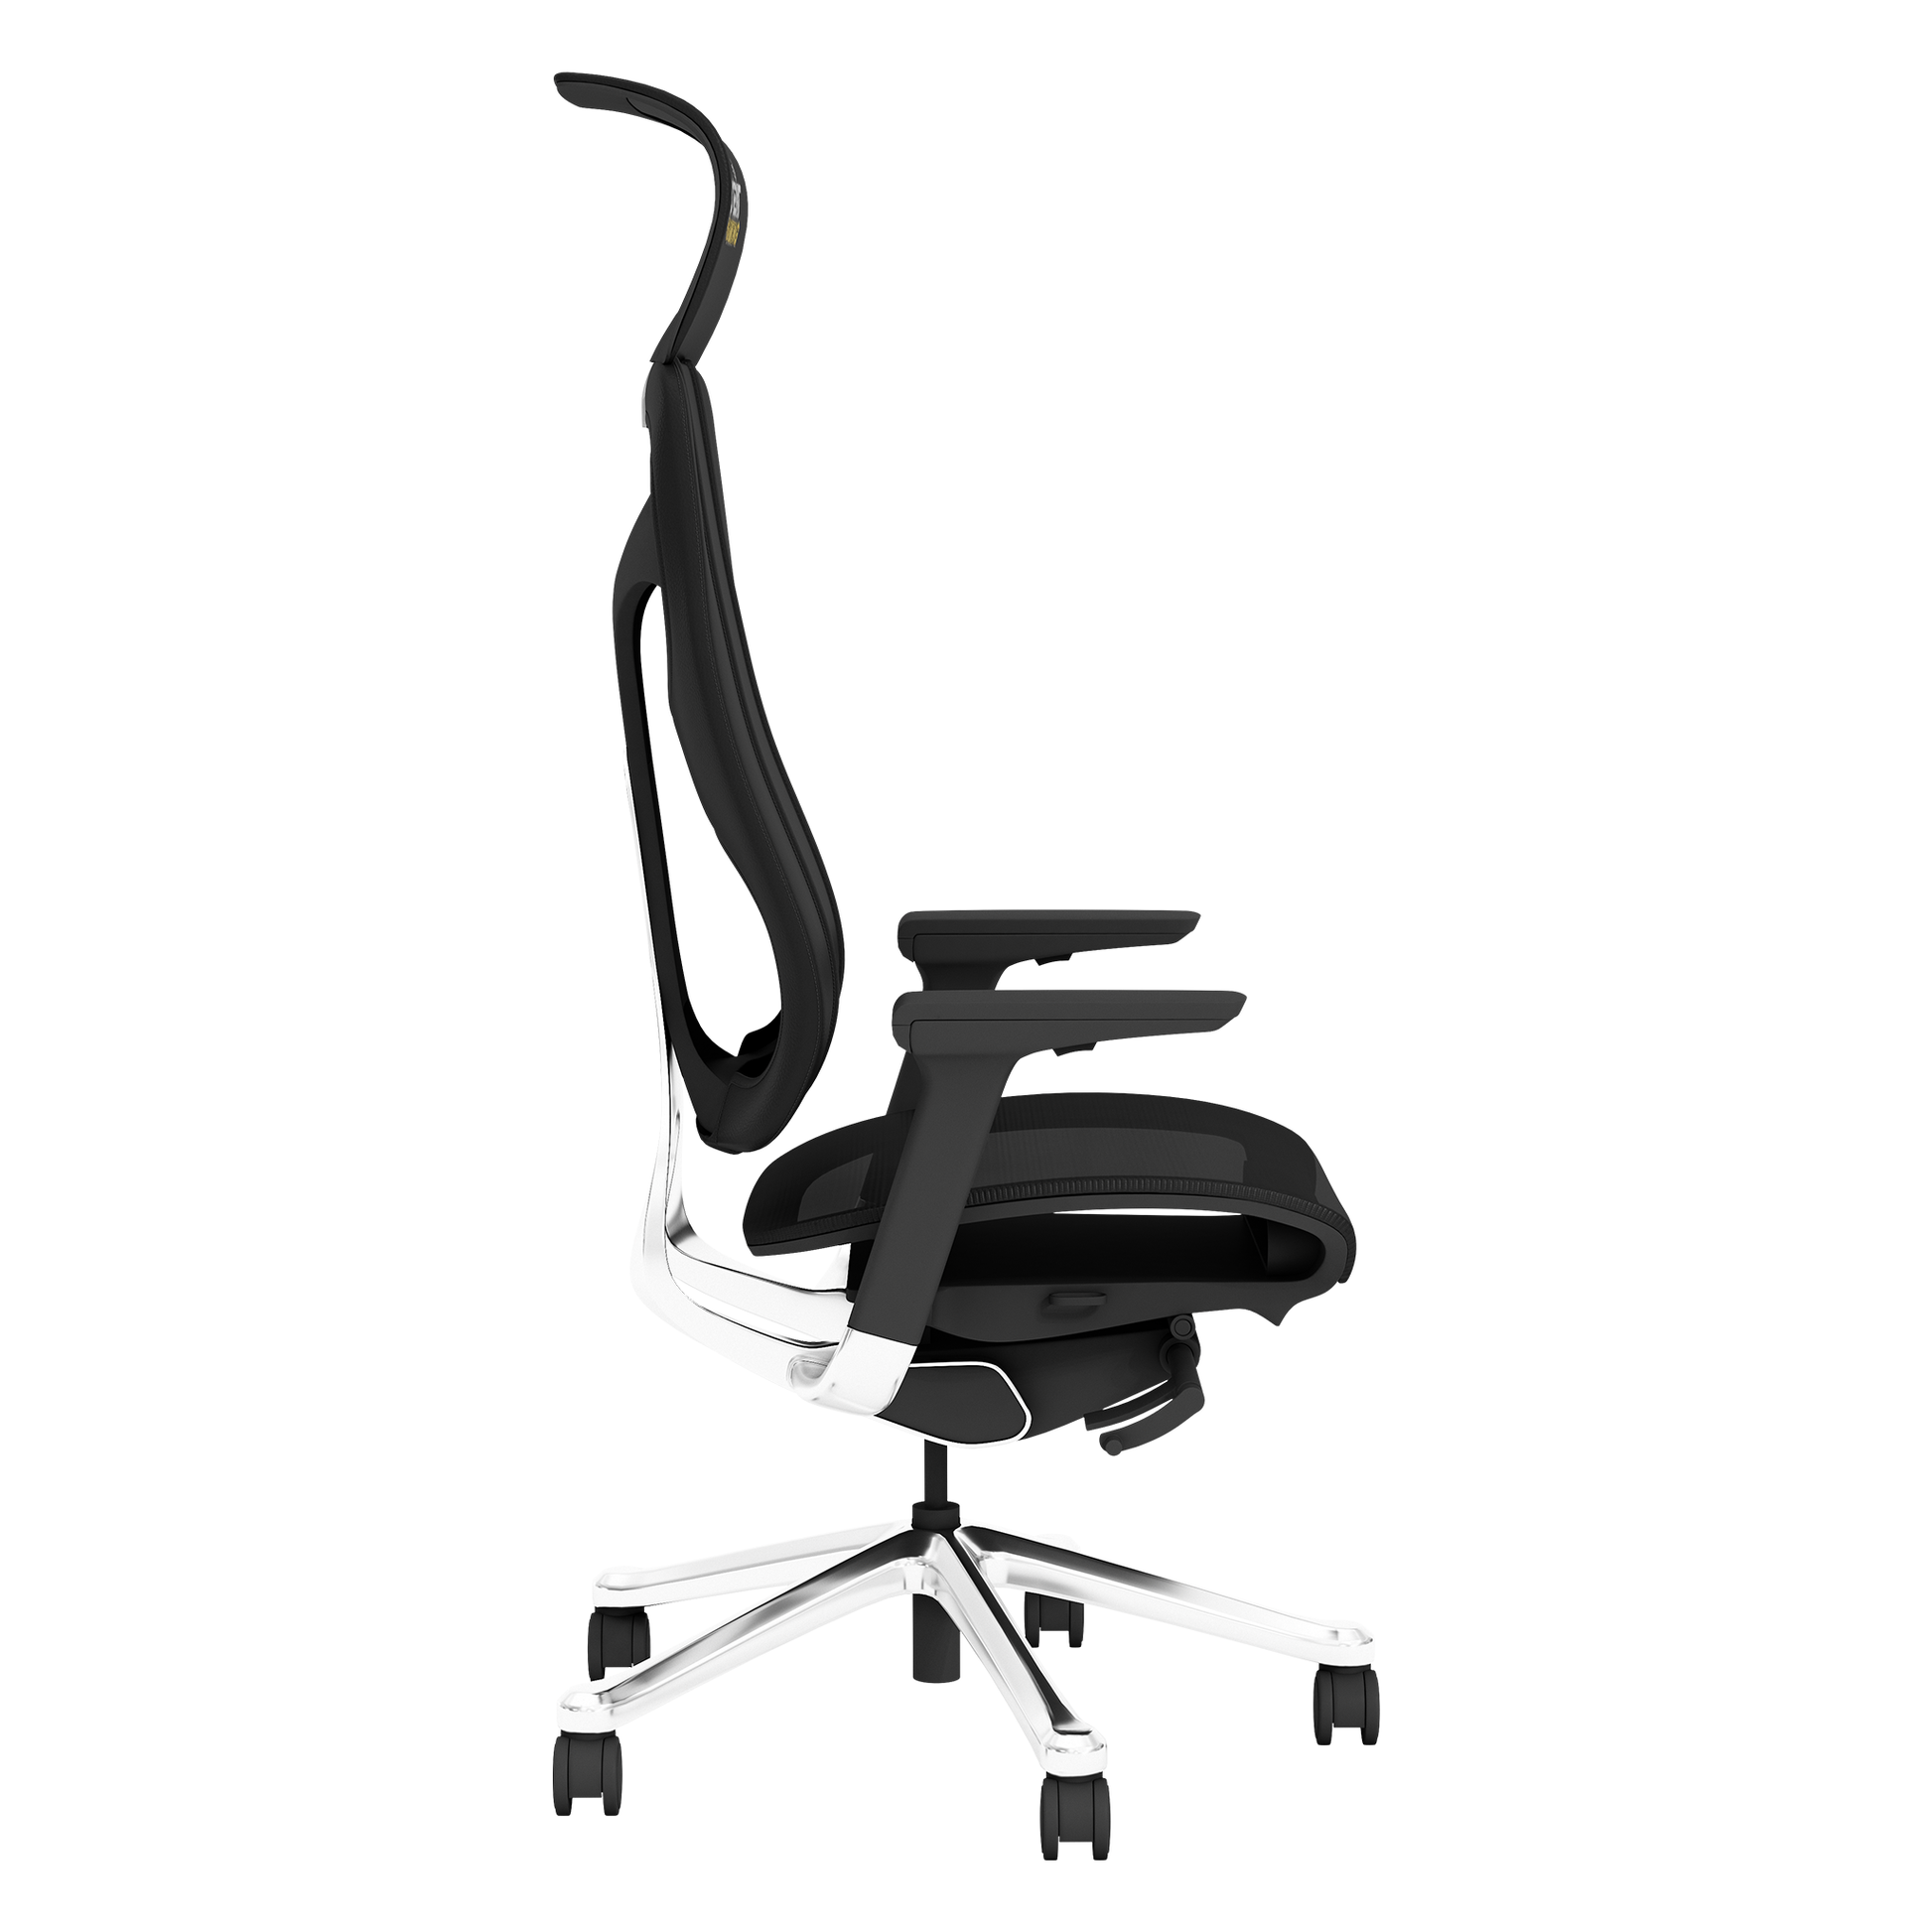 Phantom Mesh Gaming Chair Removable Headrest Ergonomic Lumbar Support –  Zipchair